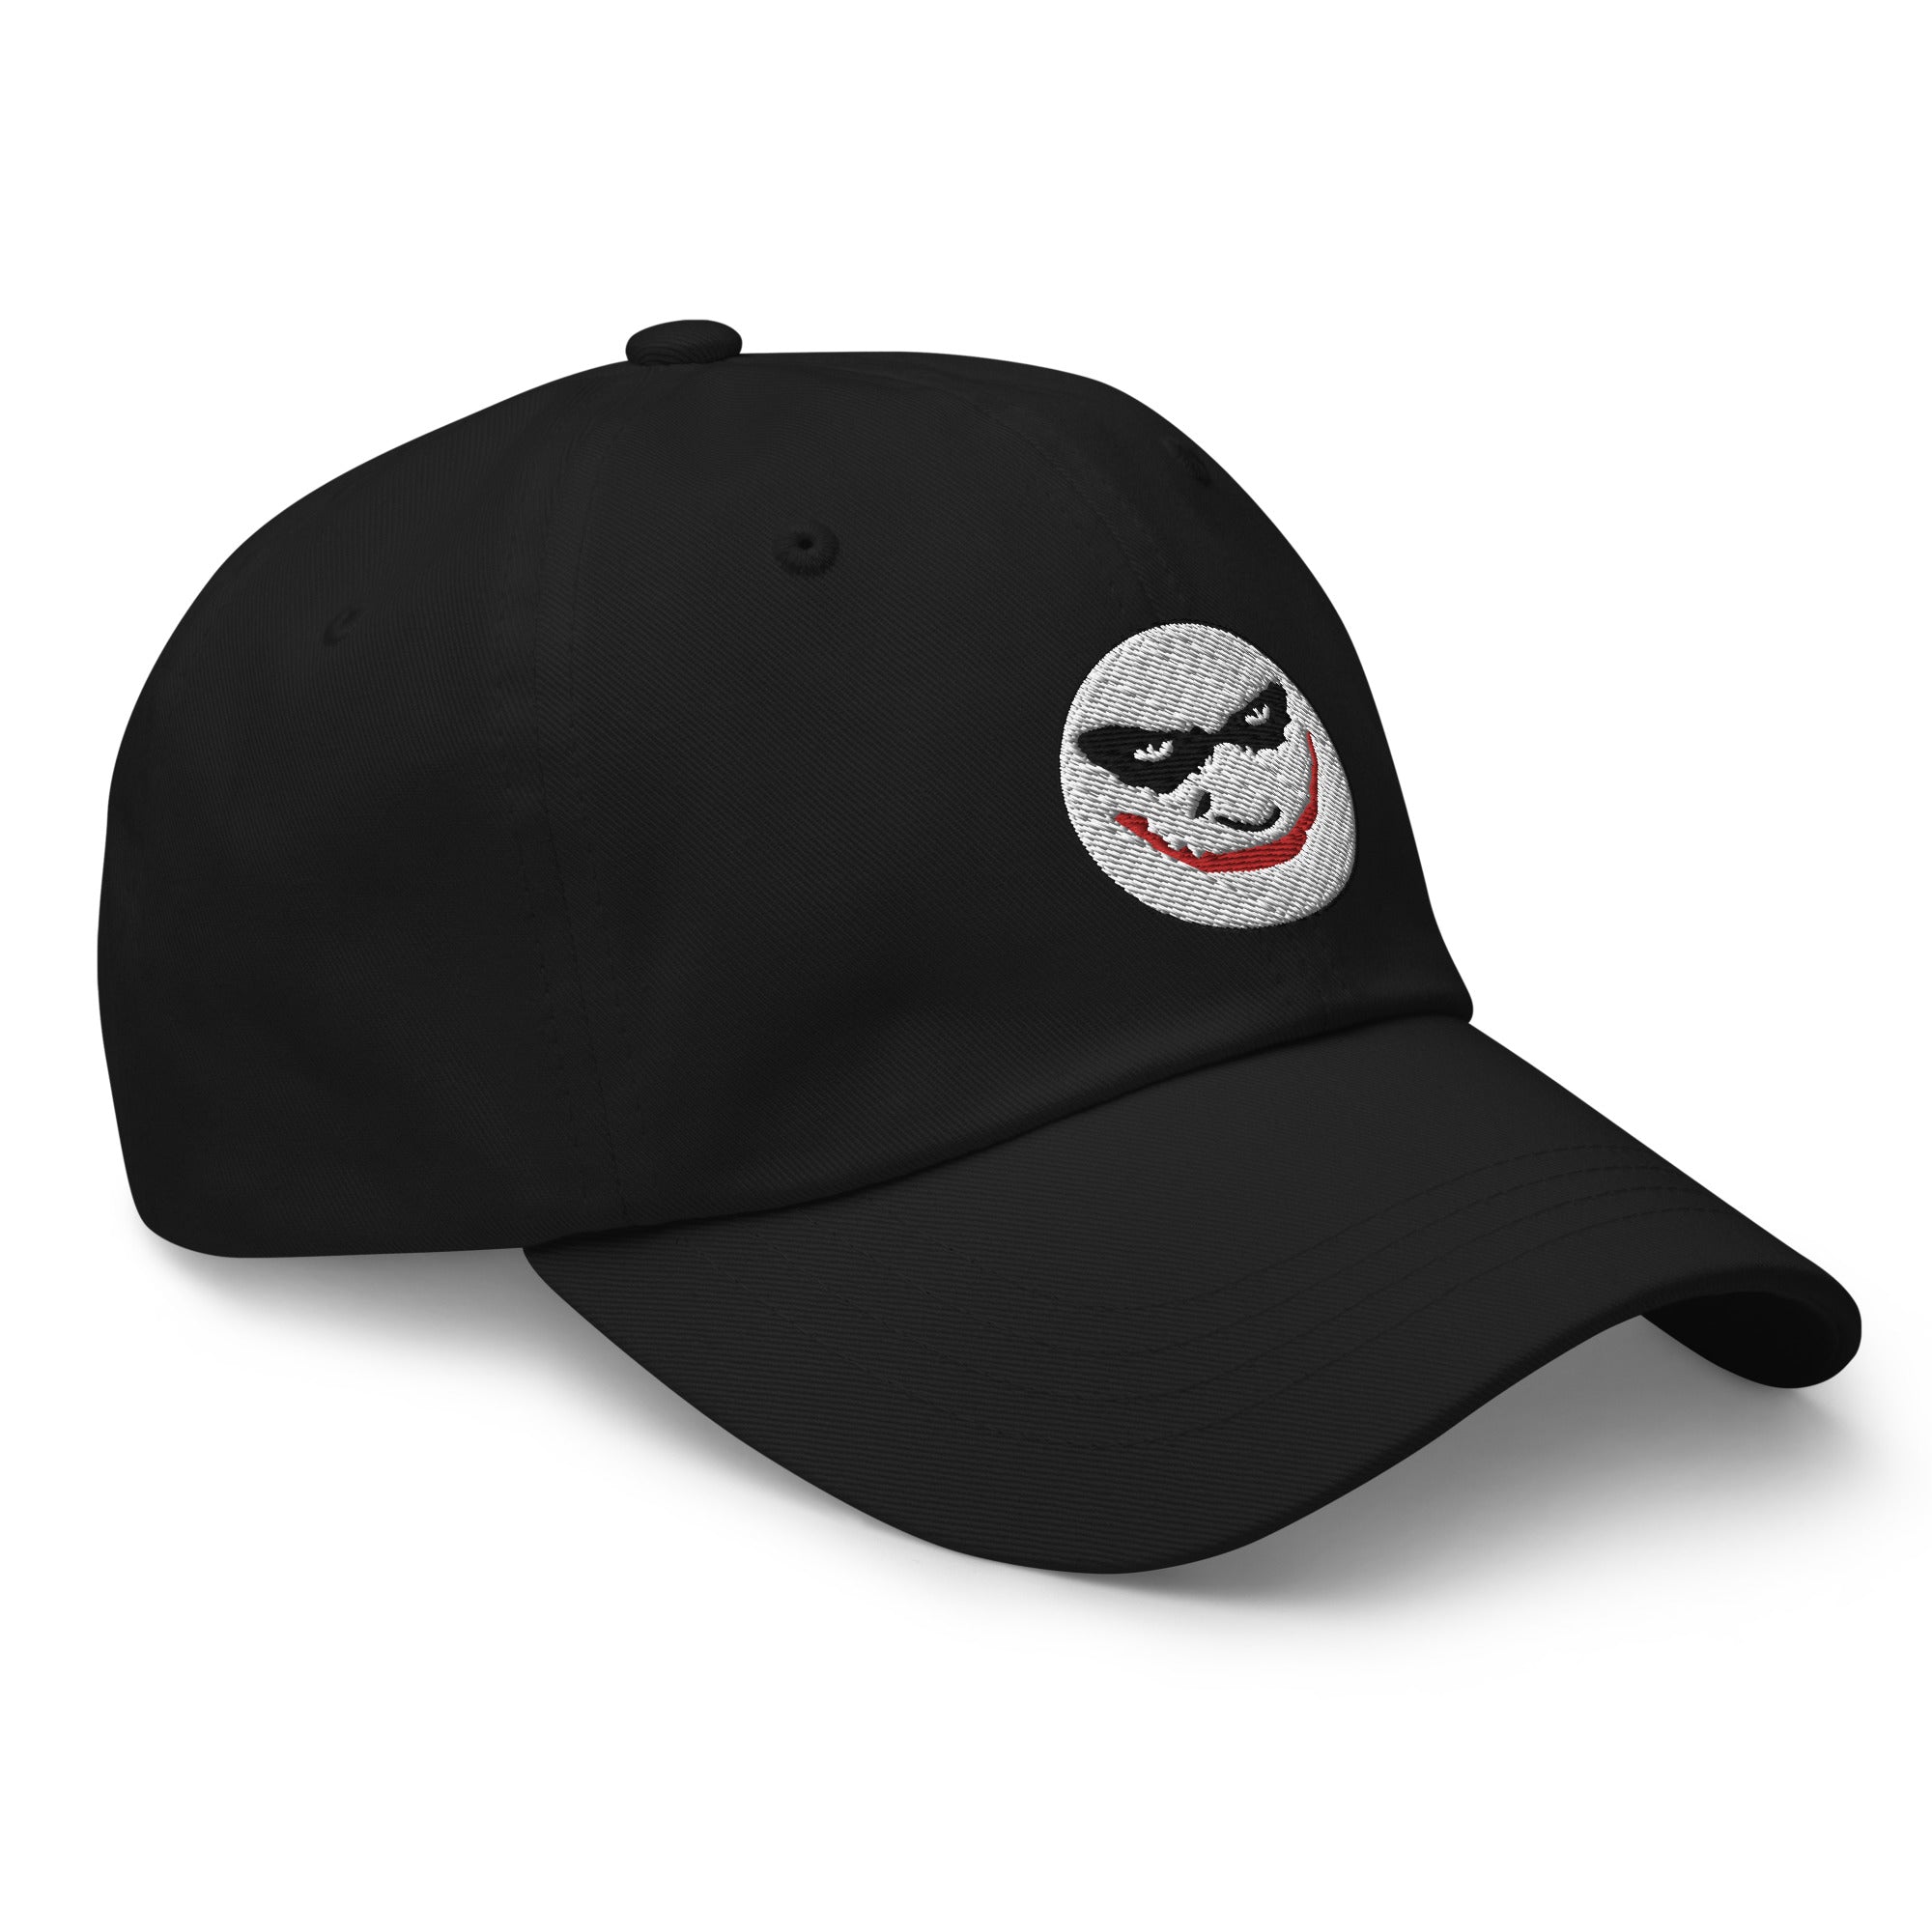 Evil Grin Joker Embroidered Baseball Cap Dad hat - Edge of Life Designs